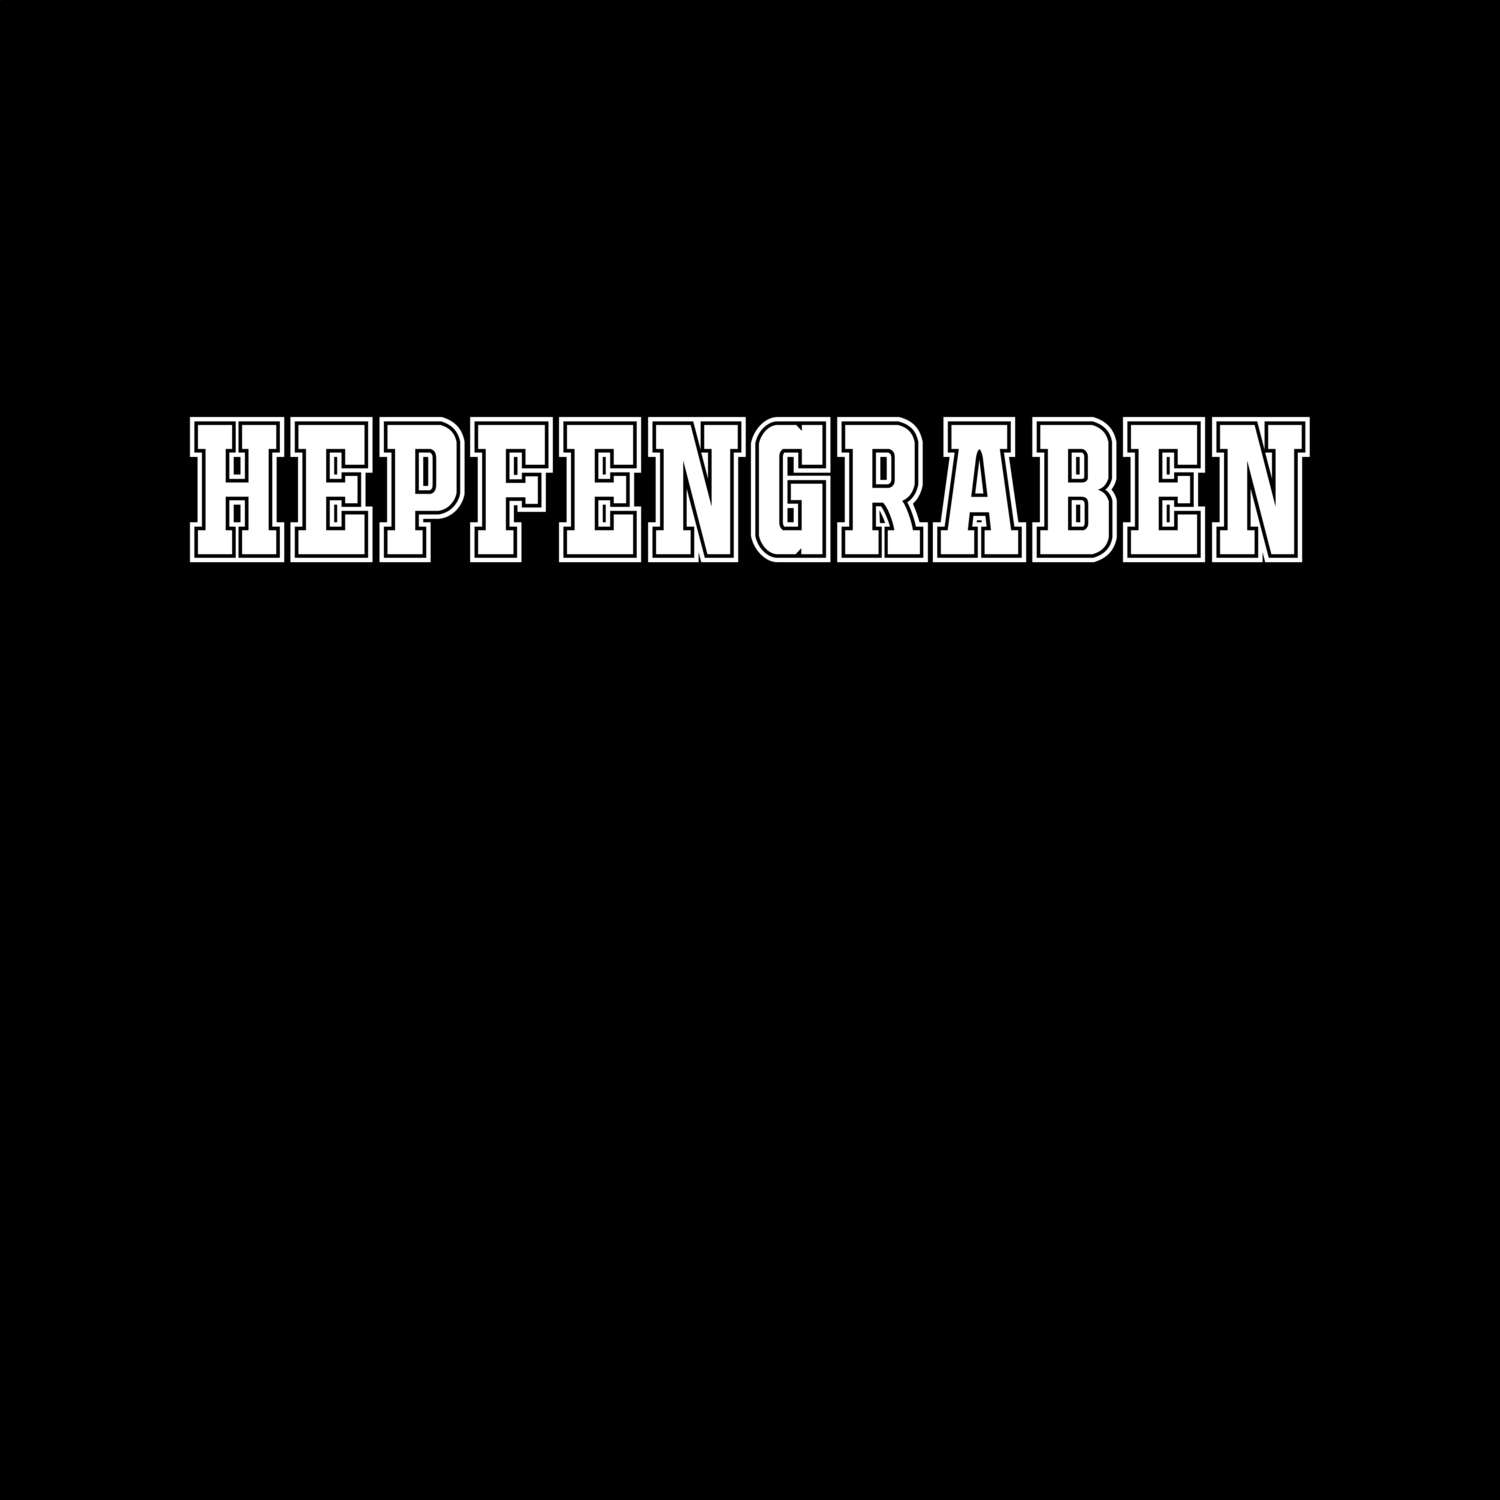 Hepfengraben T-Shirt »Classic«